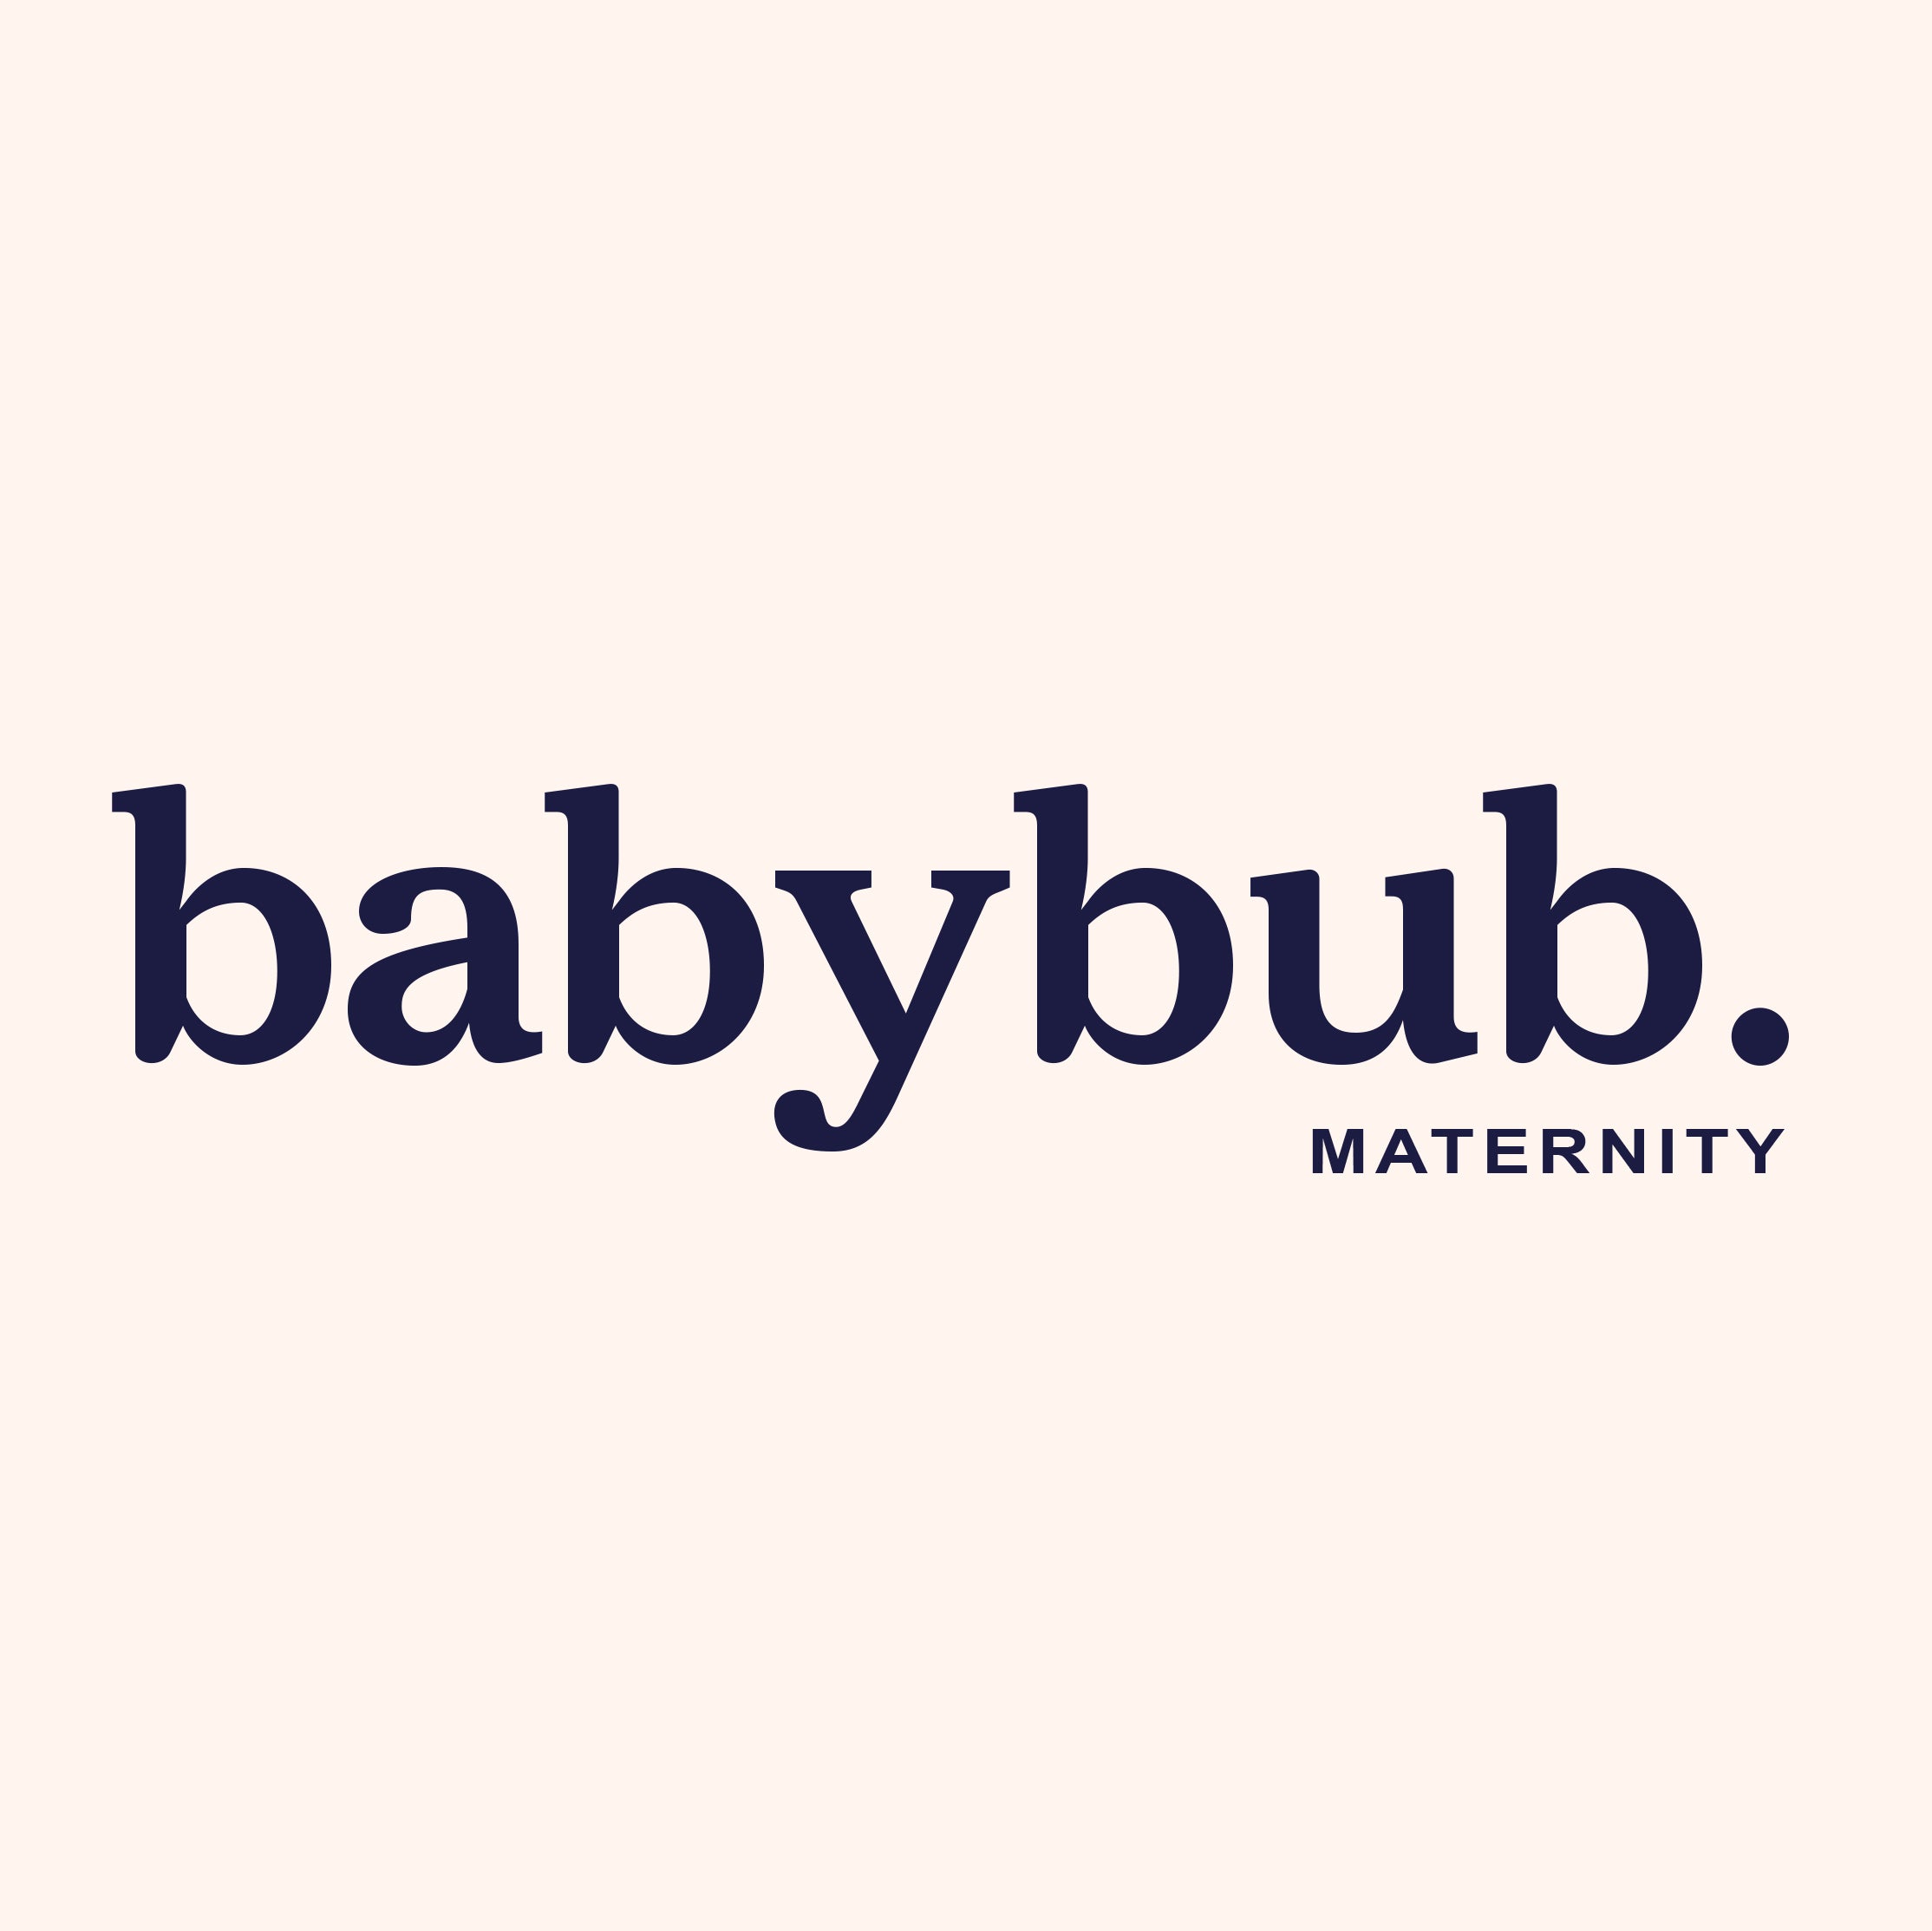 babybub | Maternity & Beyond